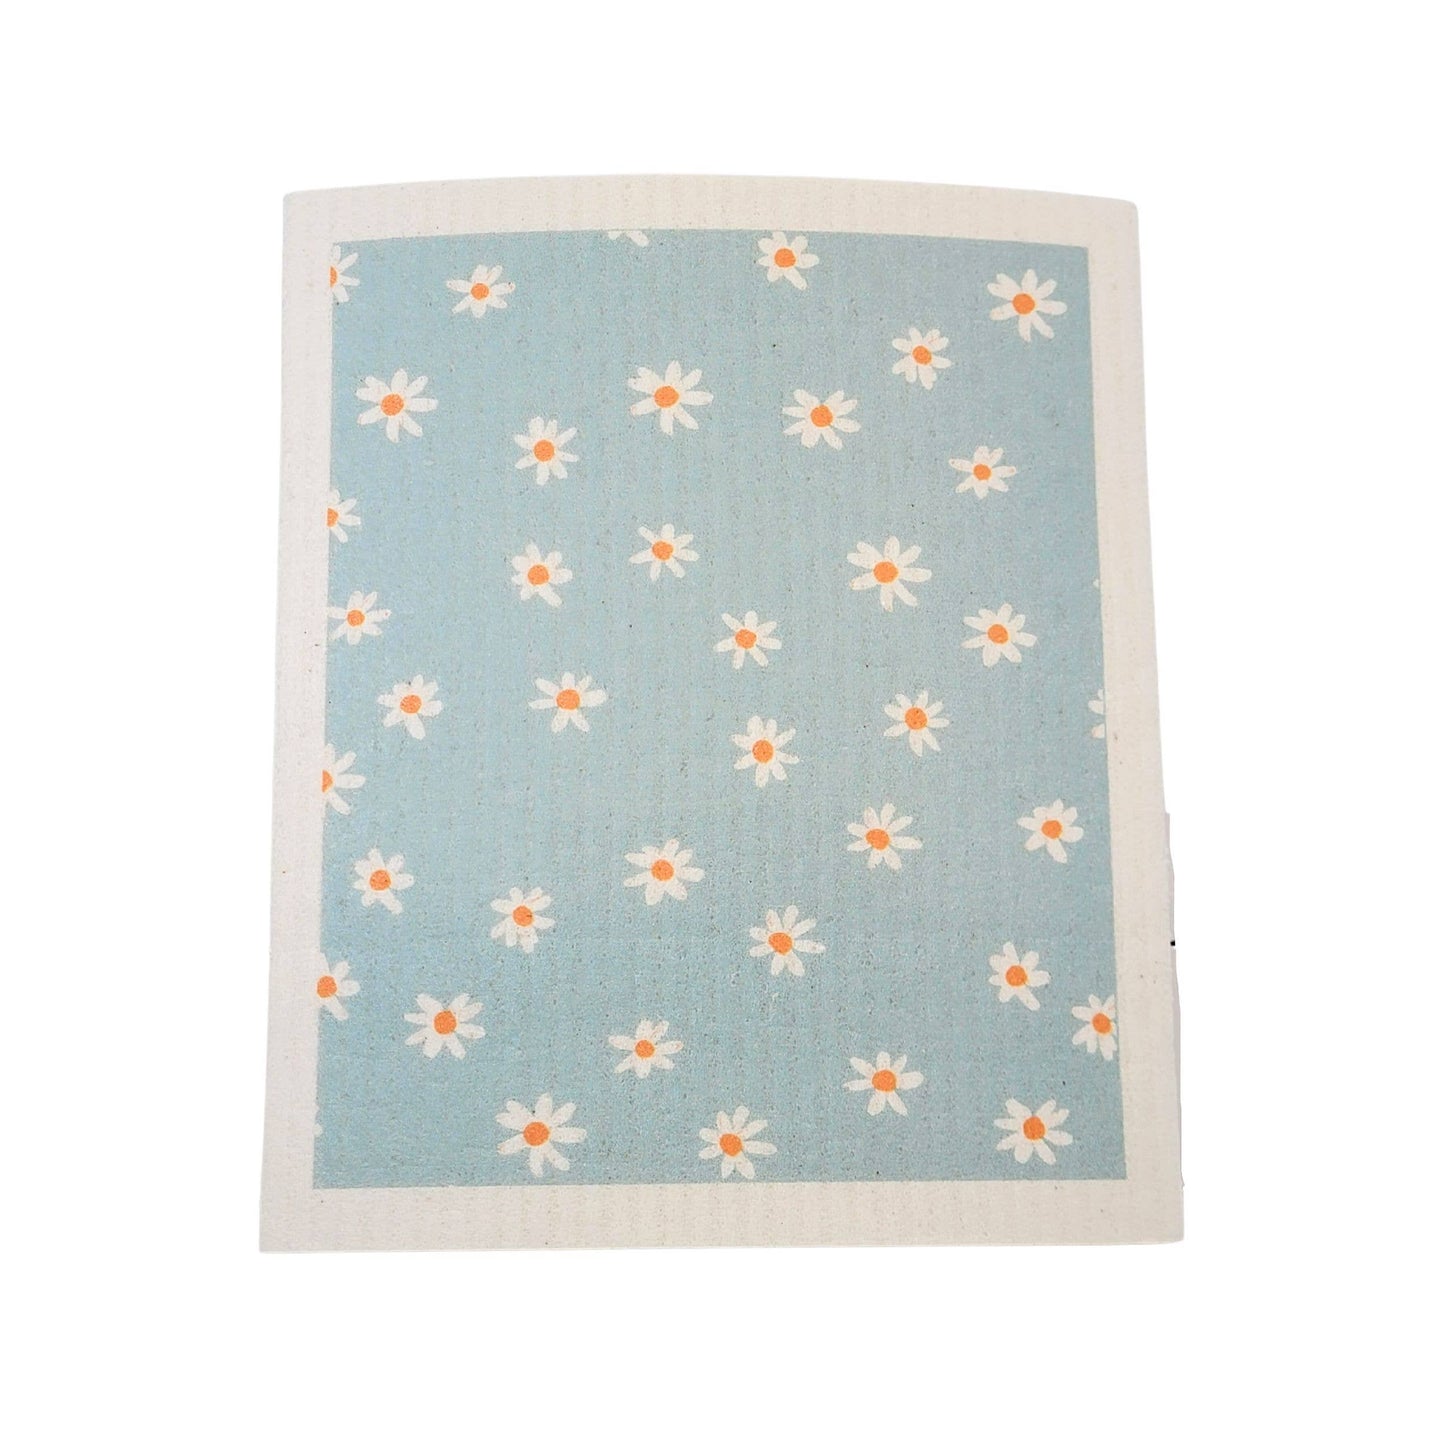 Light Blue With White Flowers - Swedish Dishcloth